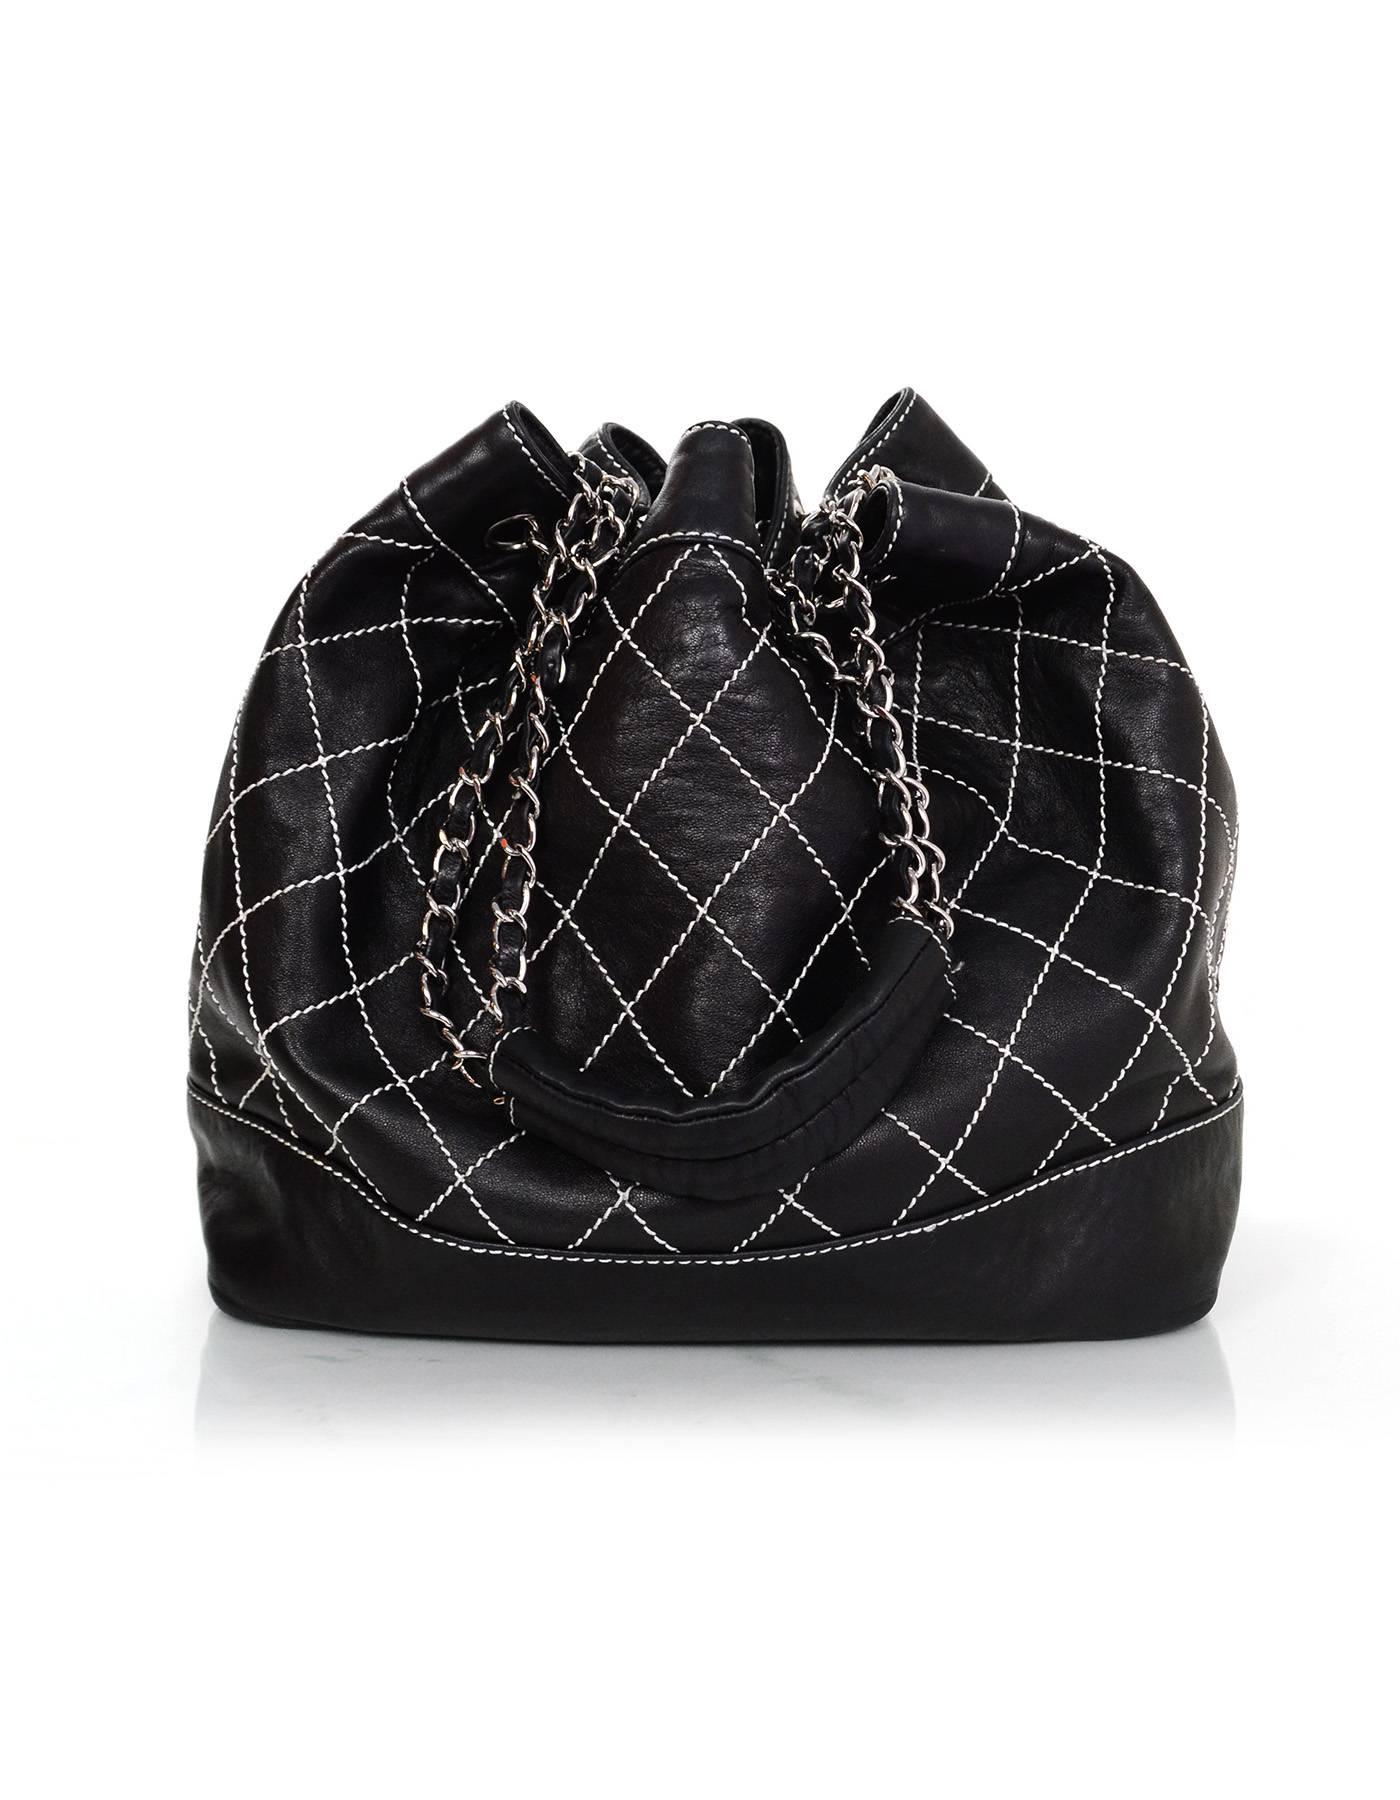 Women's Chanel Black Leather Contrast Quilted Surpique Bucket Bag